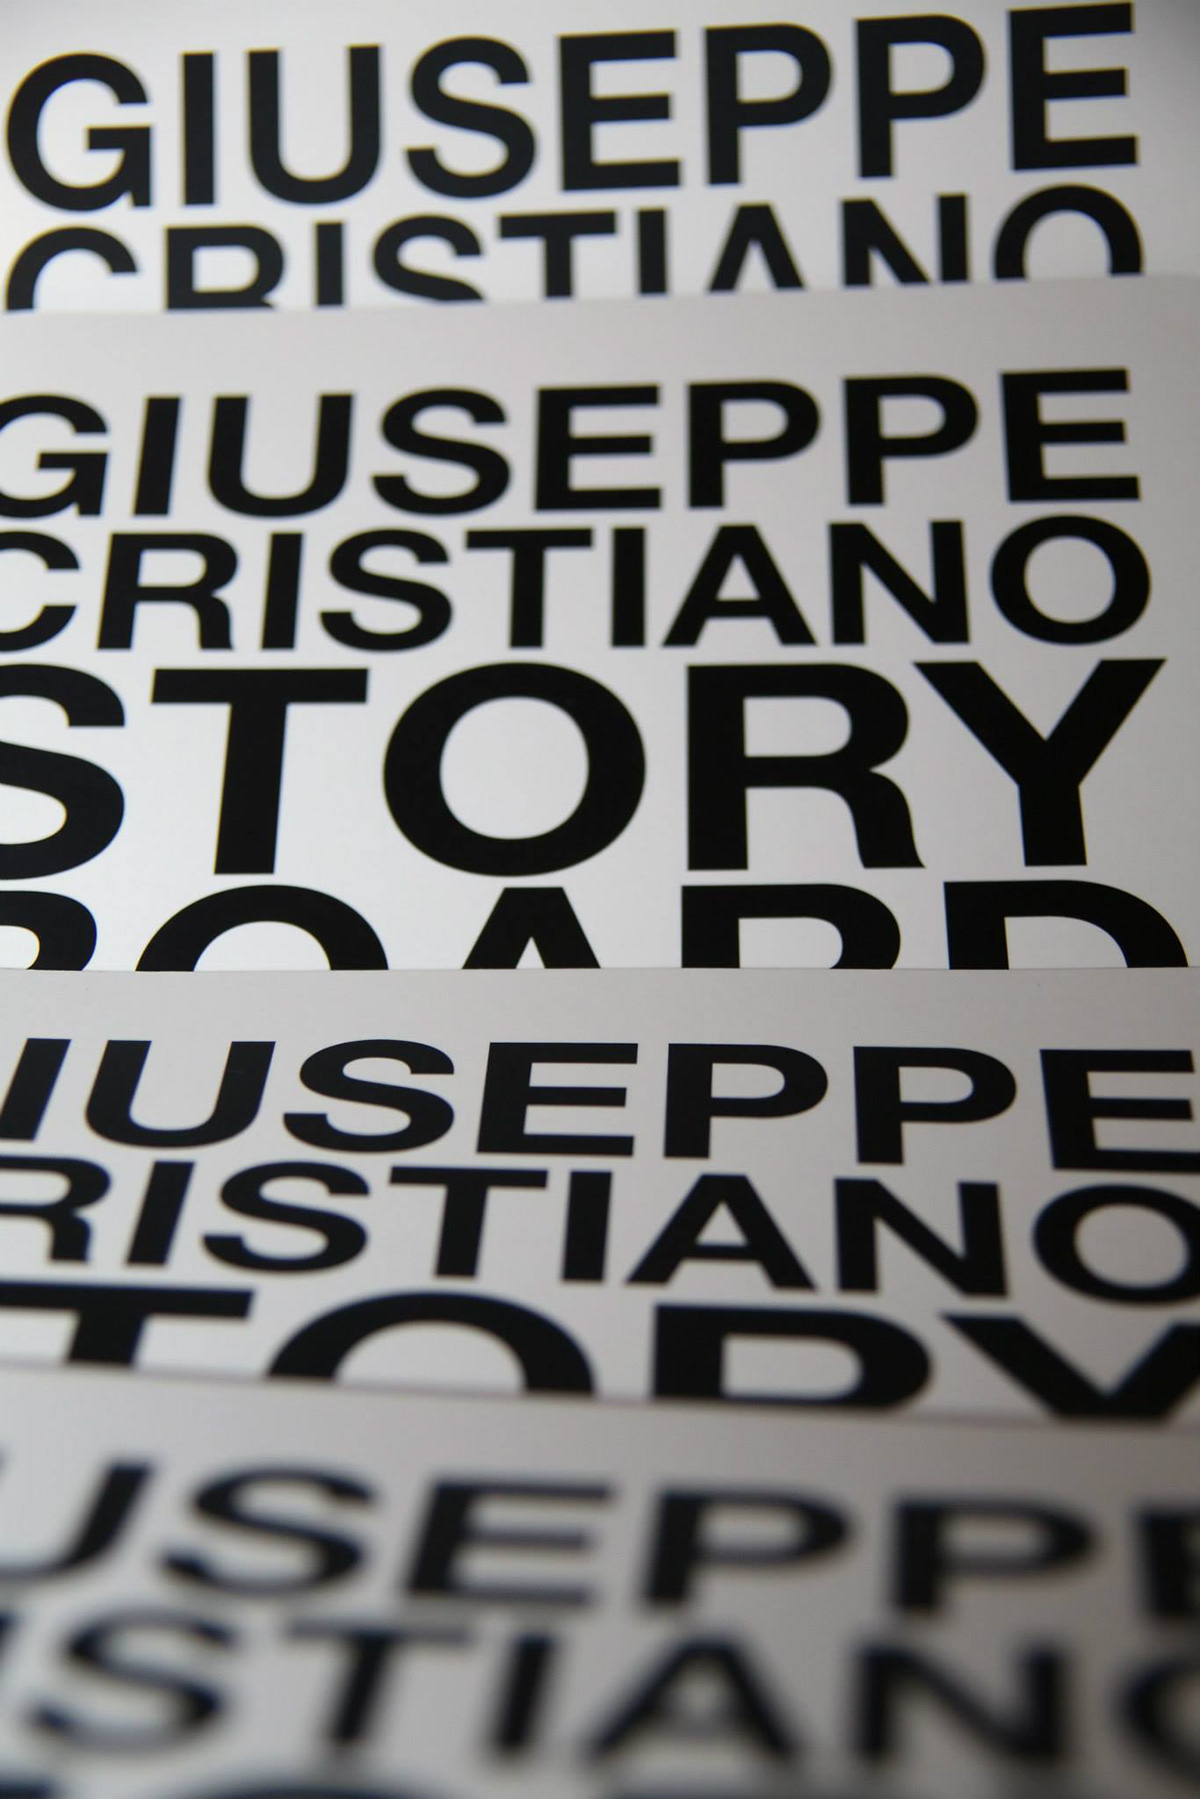 giuseppe cristiano Peppe Cristiano visualizer storyboard artist